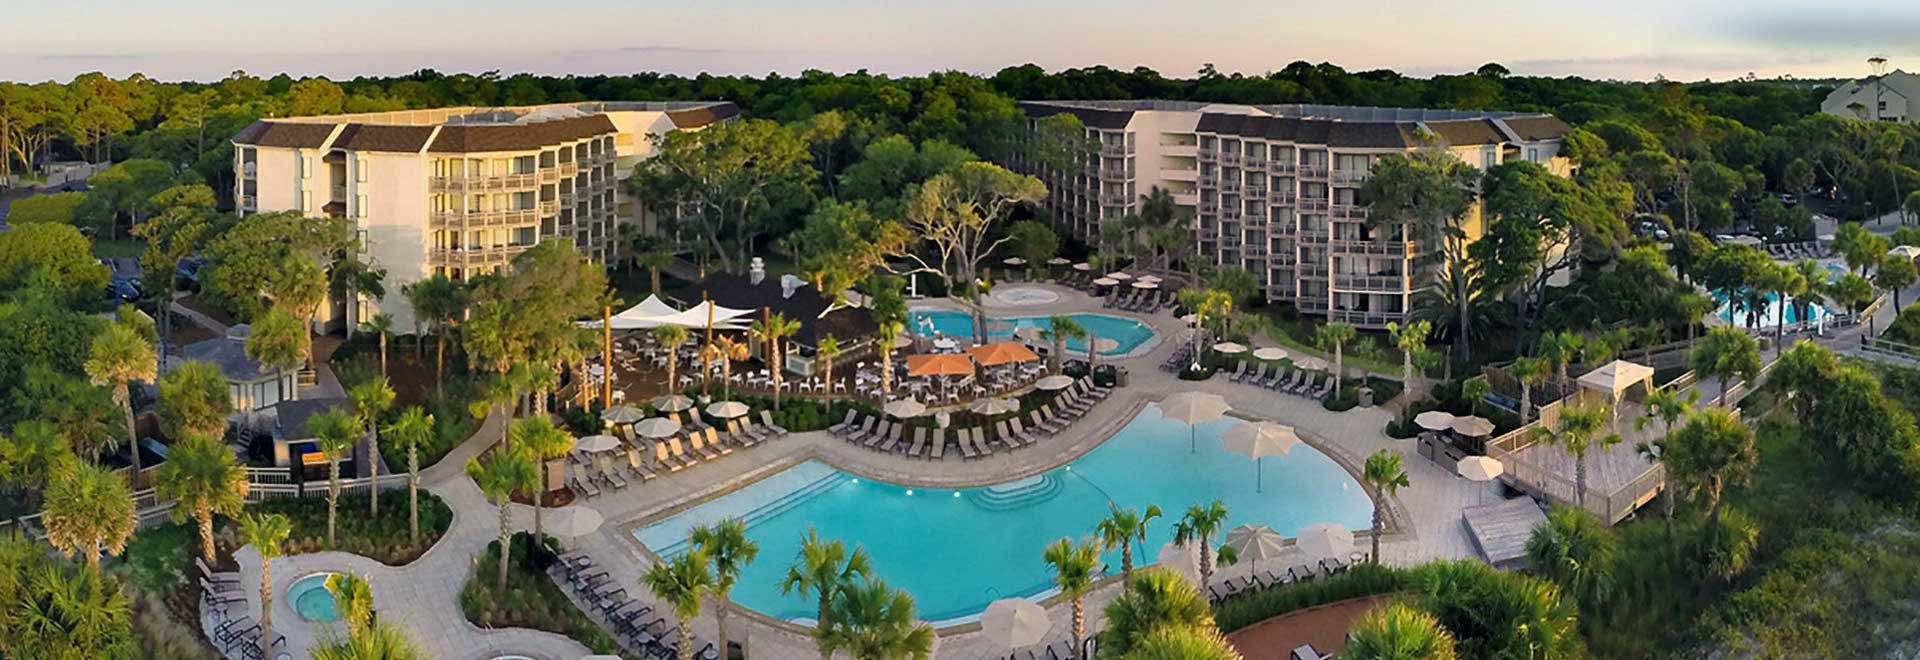 Cliff Drysdale Tennis - Omni Hilton Head Oceanfront Resort, South Carolina - Book. Travel. Play.